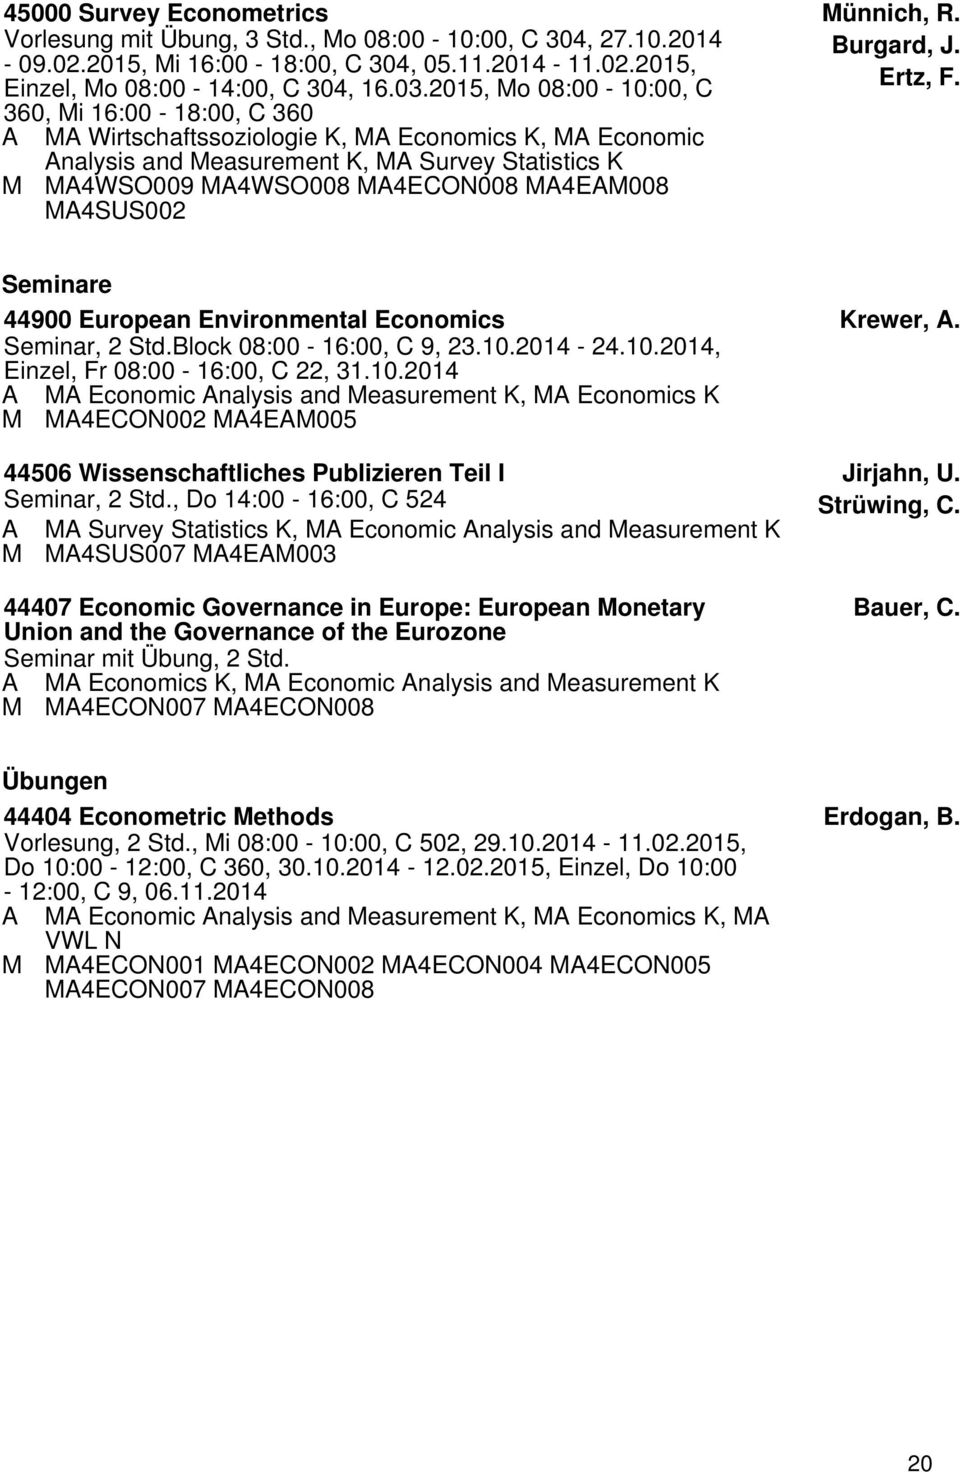 ünnich, R. Burgard, J. Ertz, F. Seminare 44900 European Environmental Economics Seminar, 2 Std.Block 08:00-16:00, C 9, 23.10.